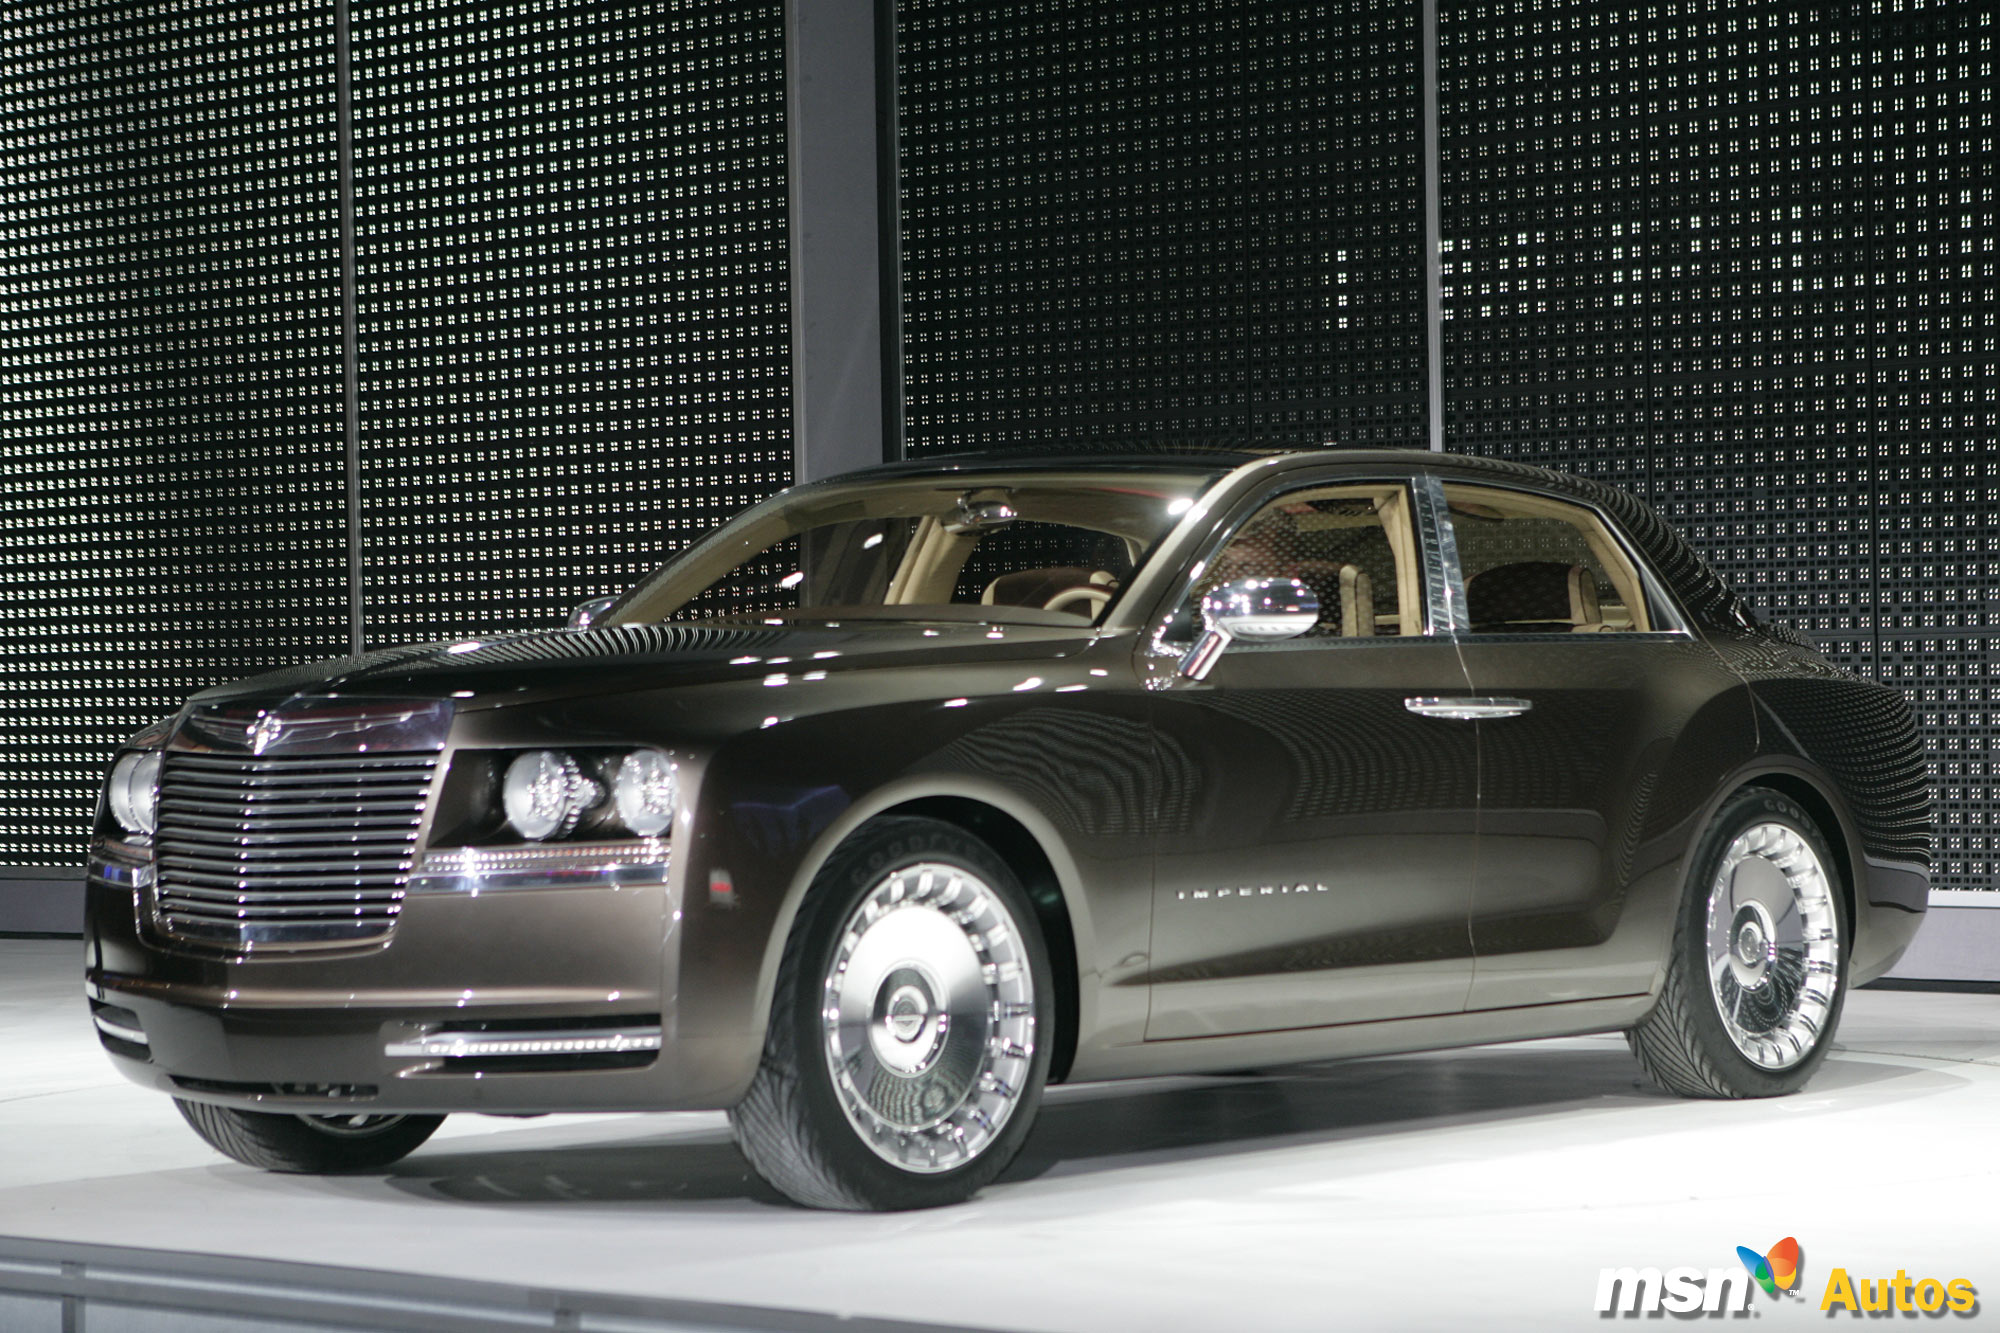 TopWorldAuto >> Photos of Chrysler Imperial - photo galleries